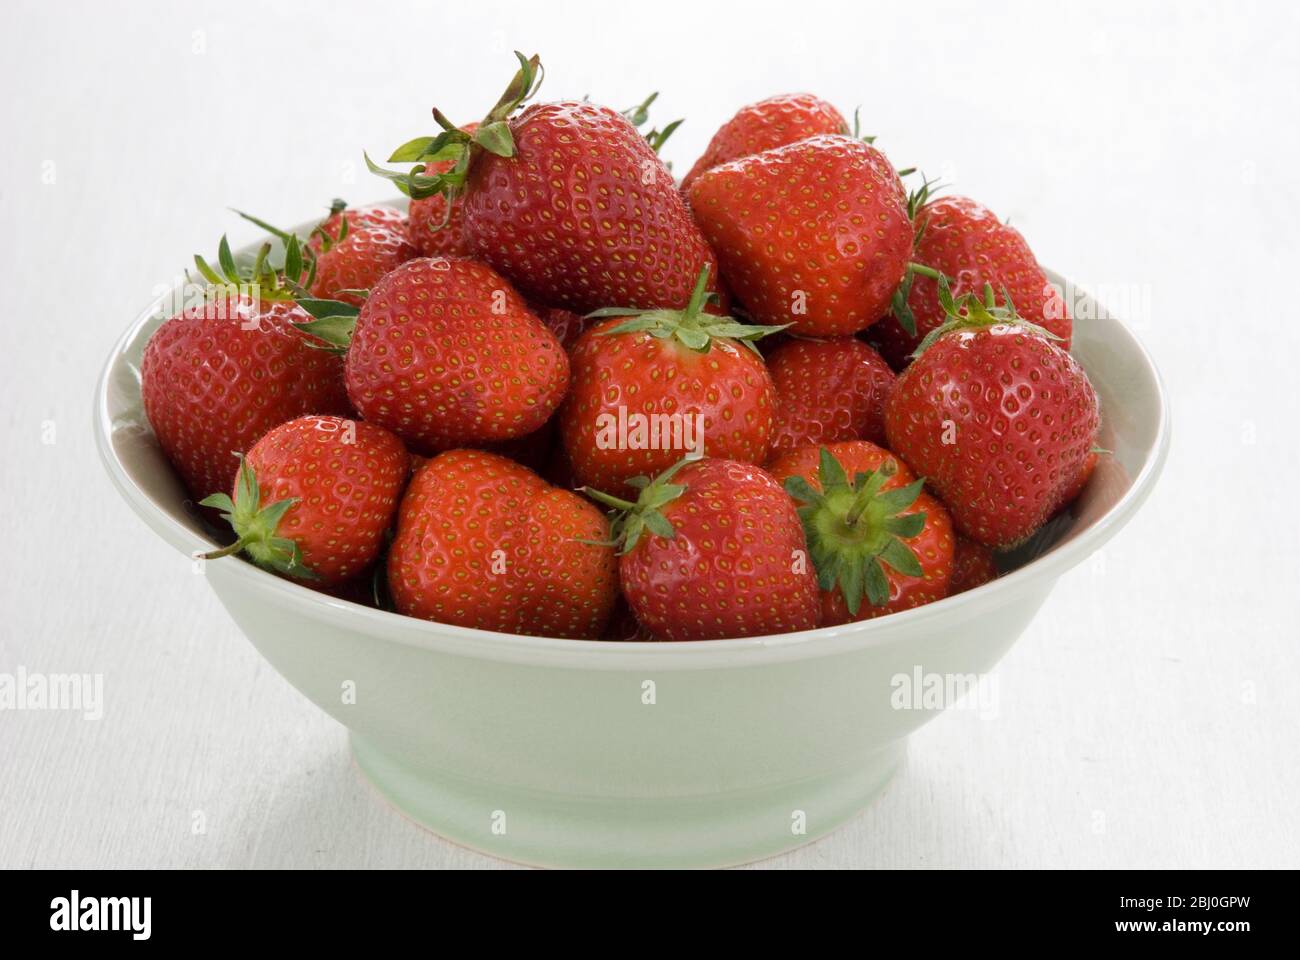 Bowl full of ripe red strawberries. Stock Photo